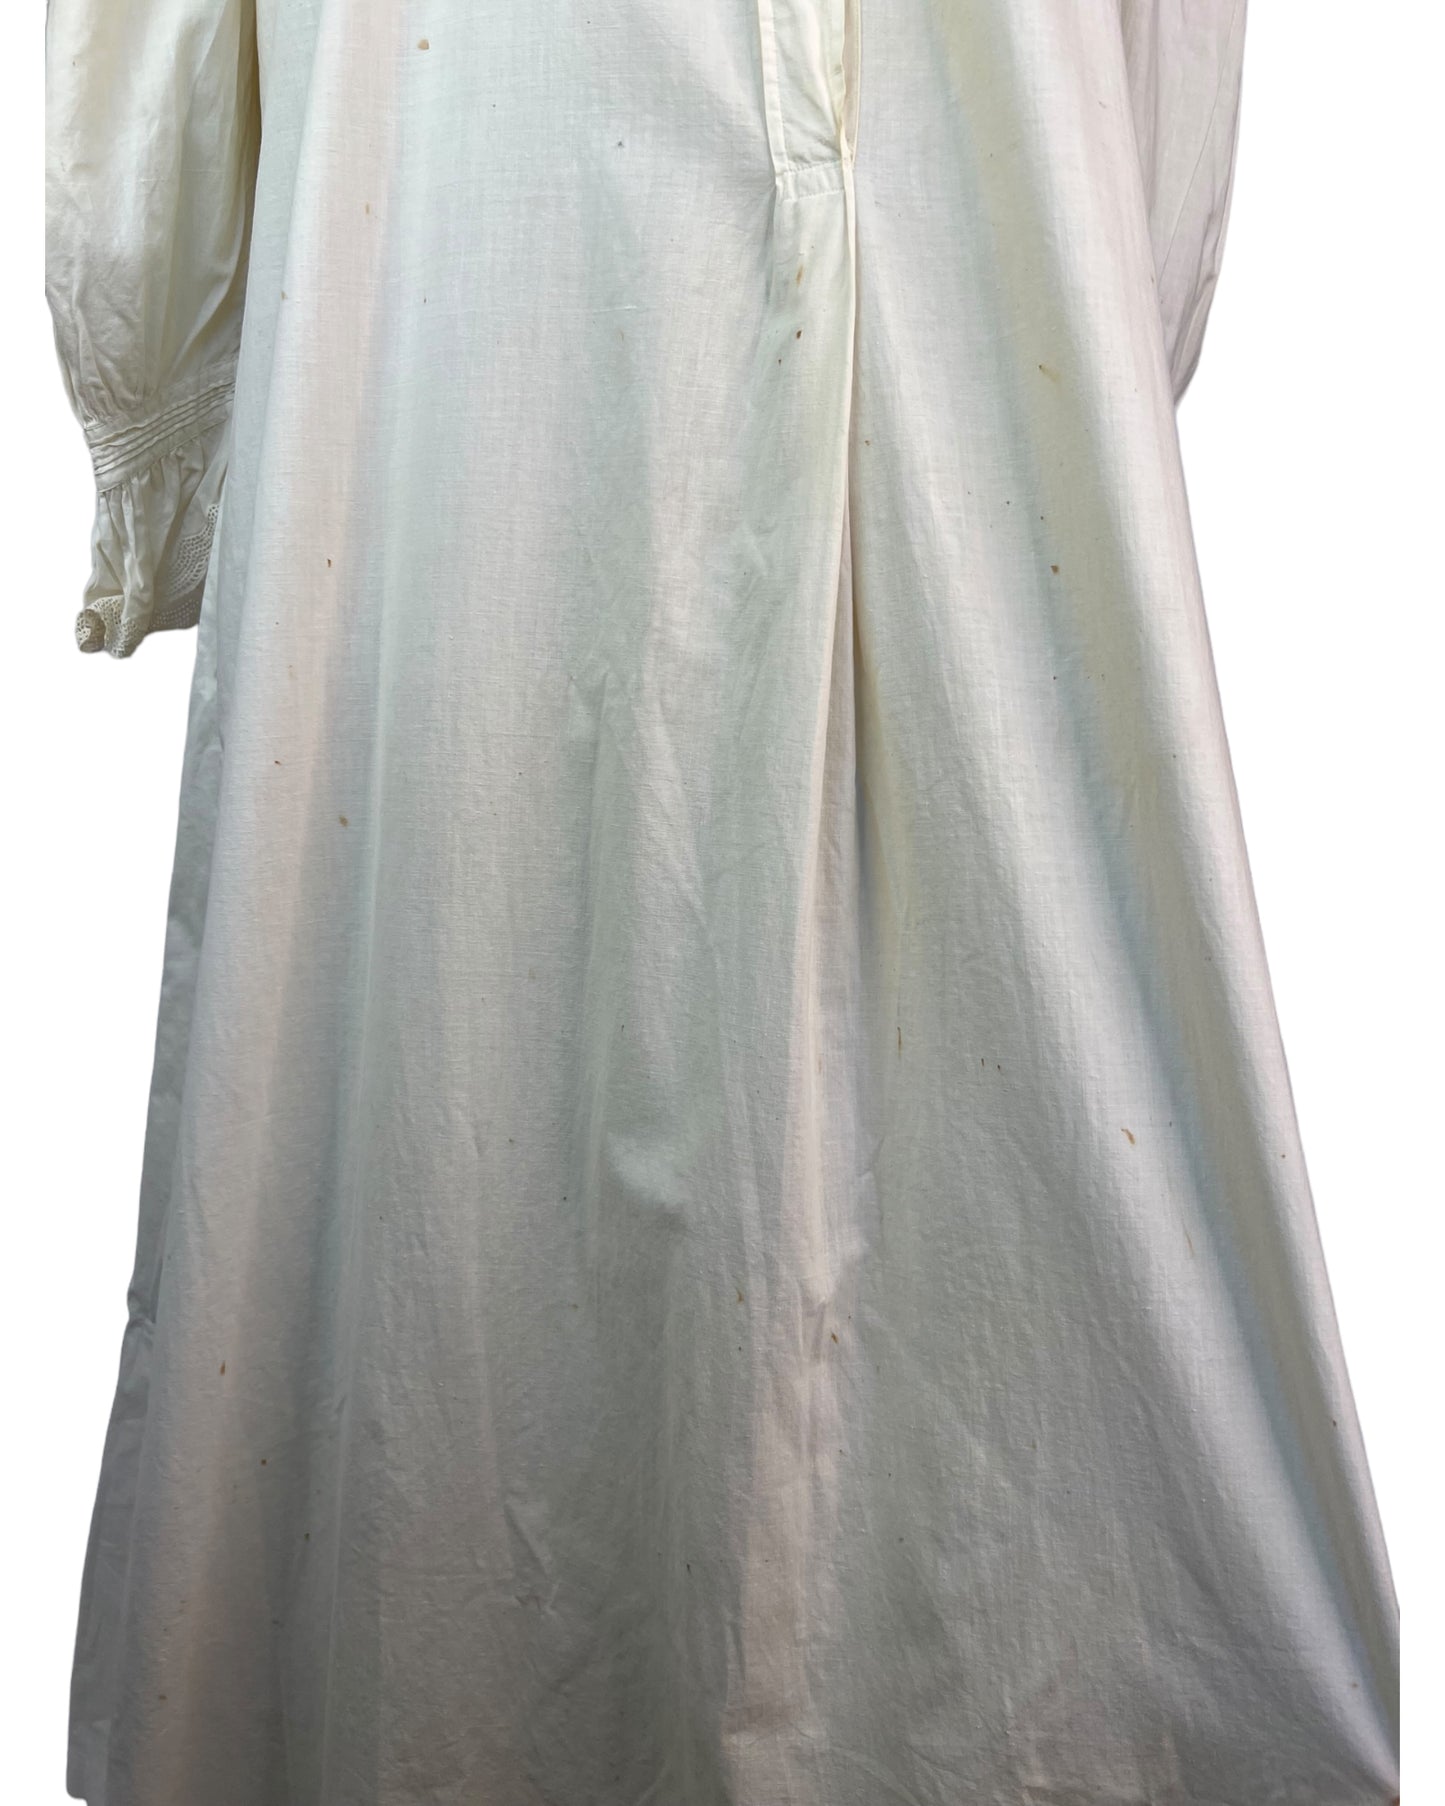 Edwardian Romance Nightgown*